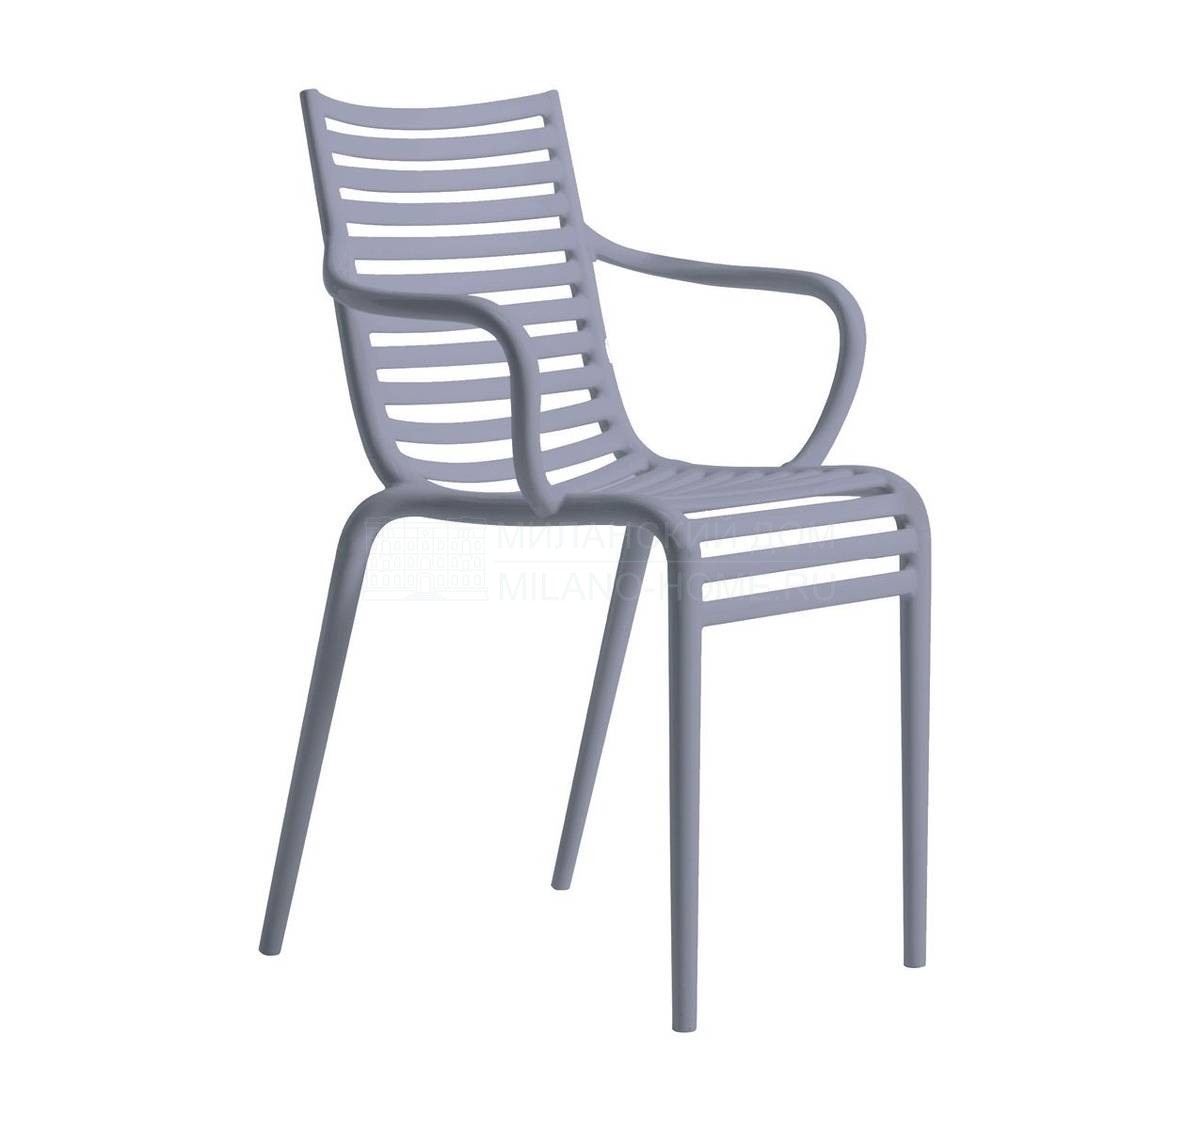 Полукресло Pip-e chair из Италии фабрики DRIADE